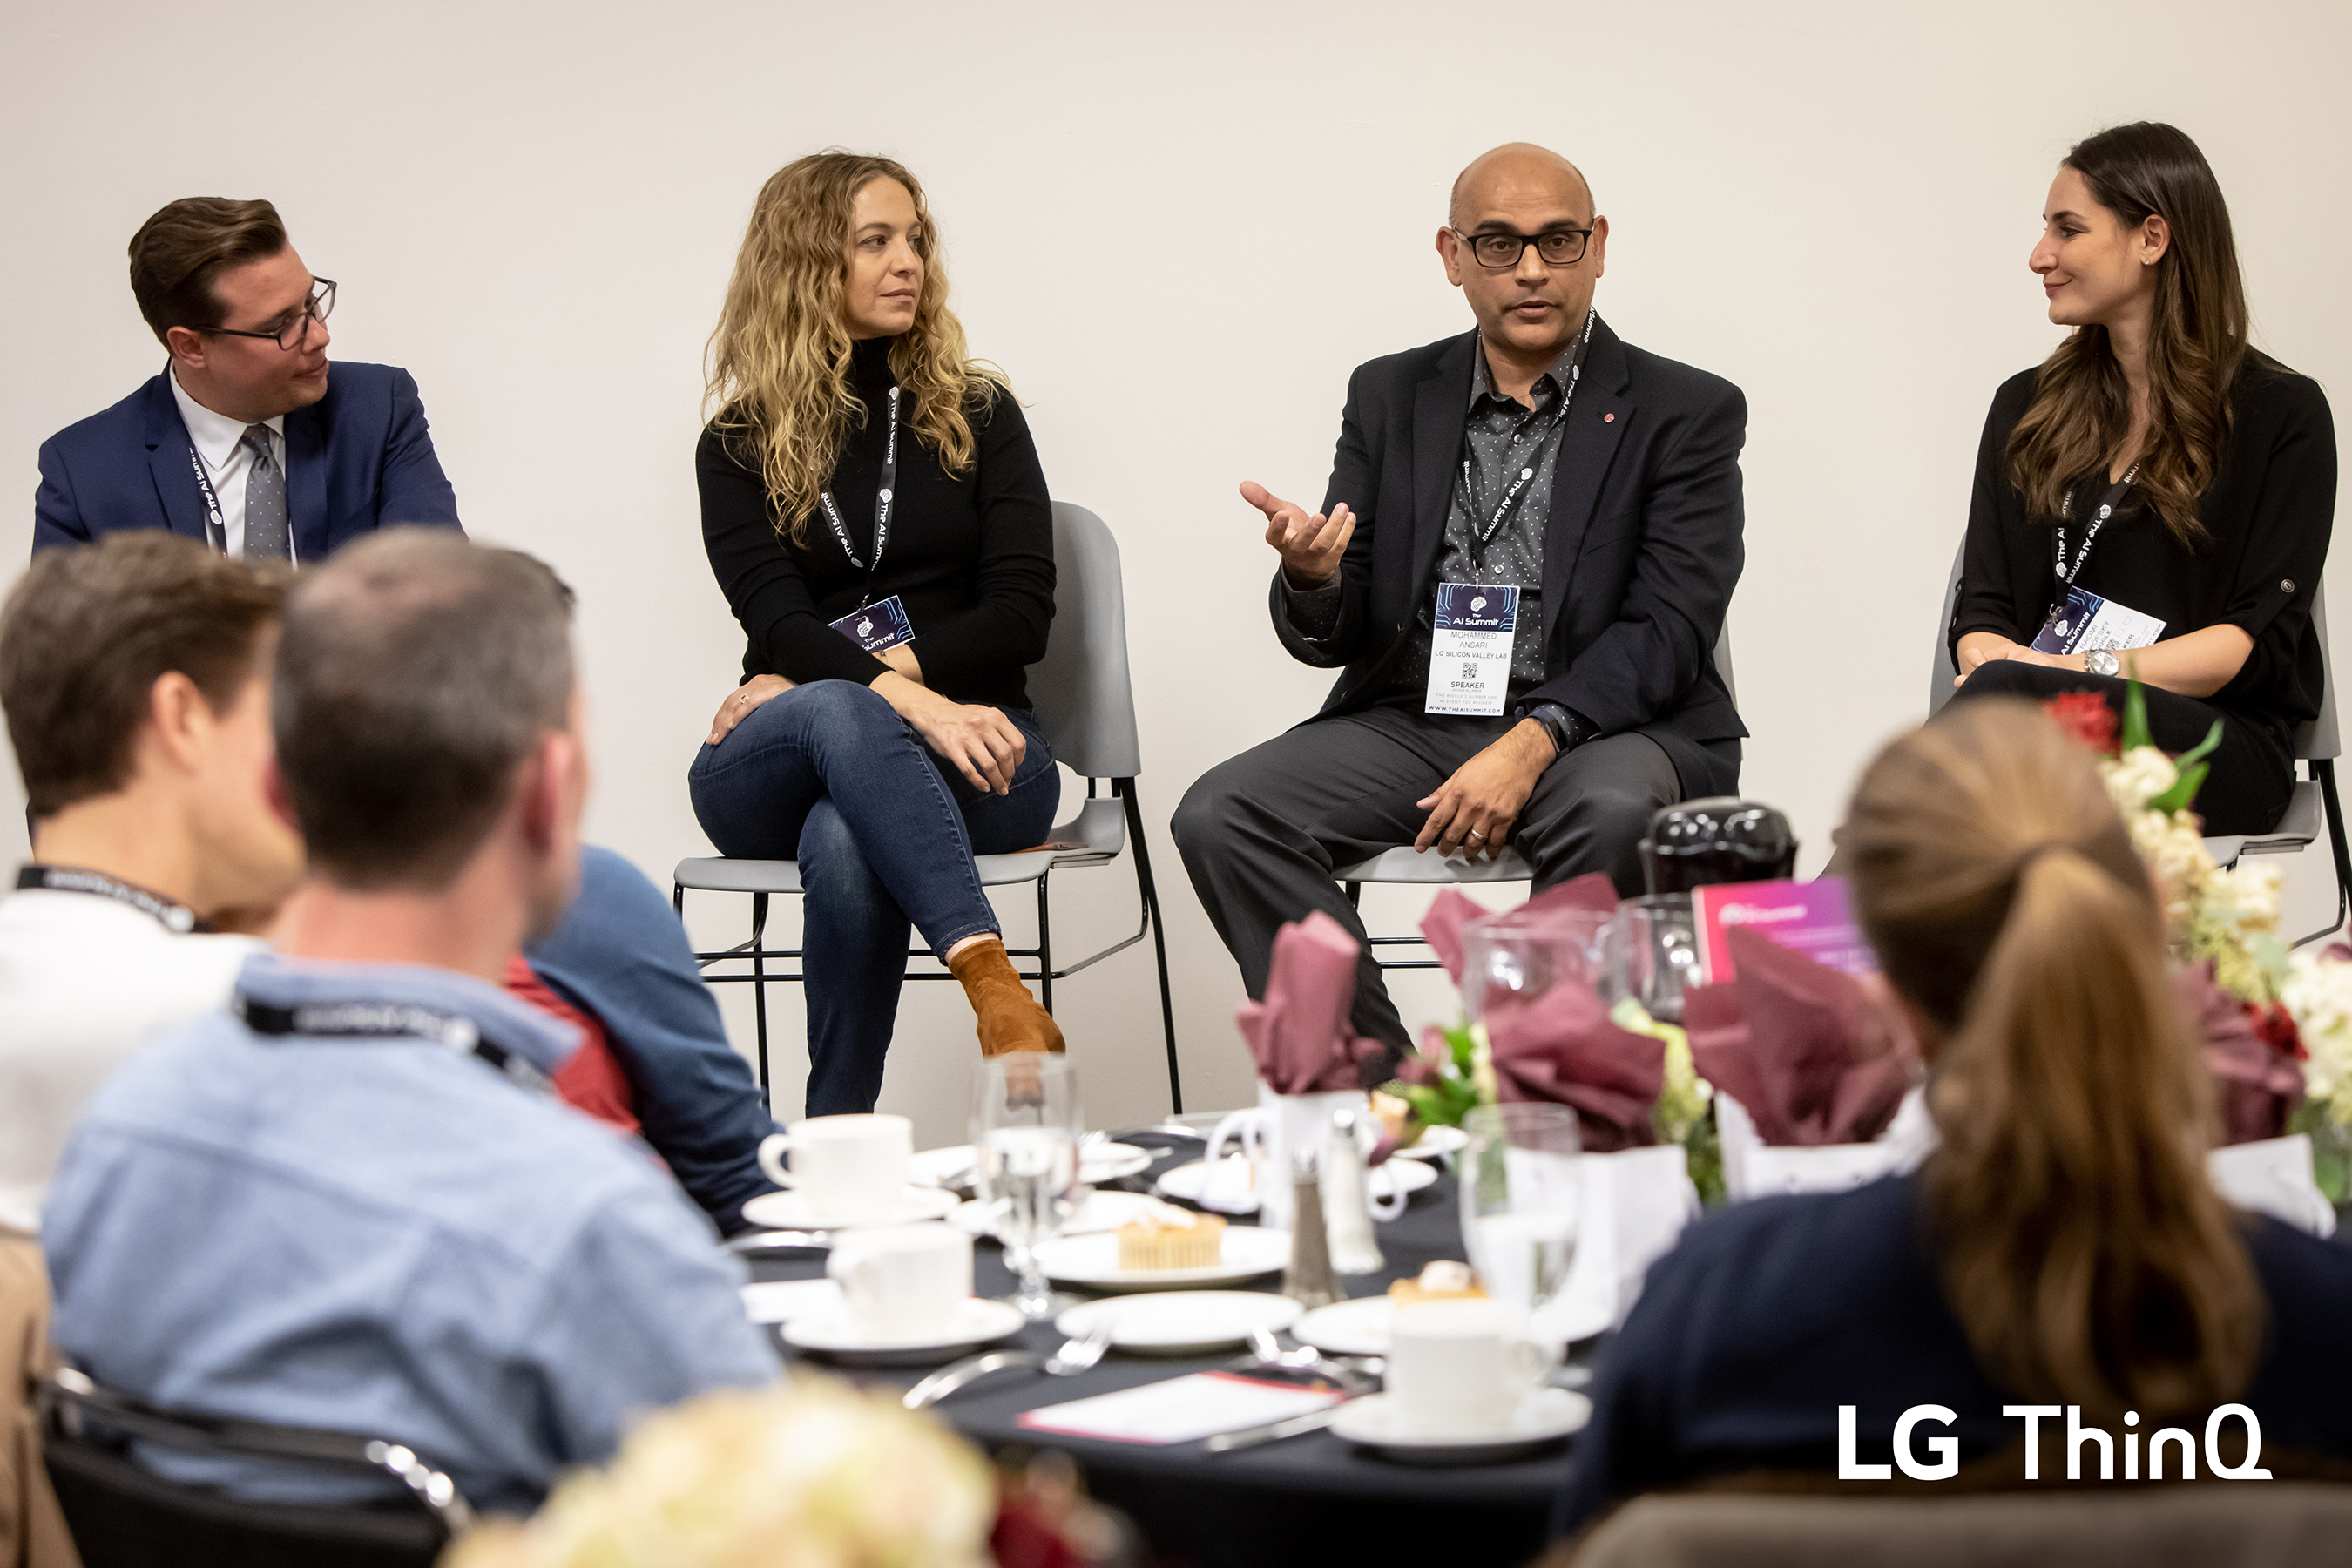 LG ThinQ Forum panelists Mohammed Ansari, Carley Knobloch, Naomi Makofsky and moderator Will Thompson